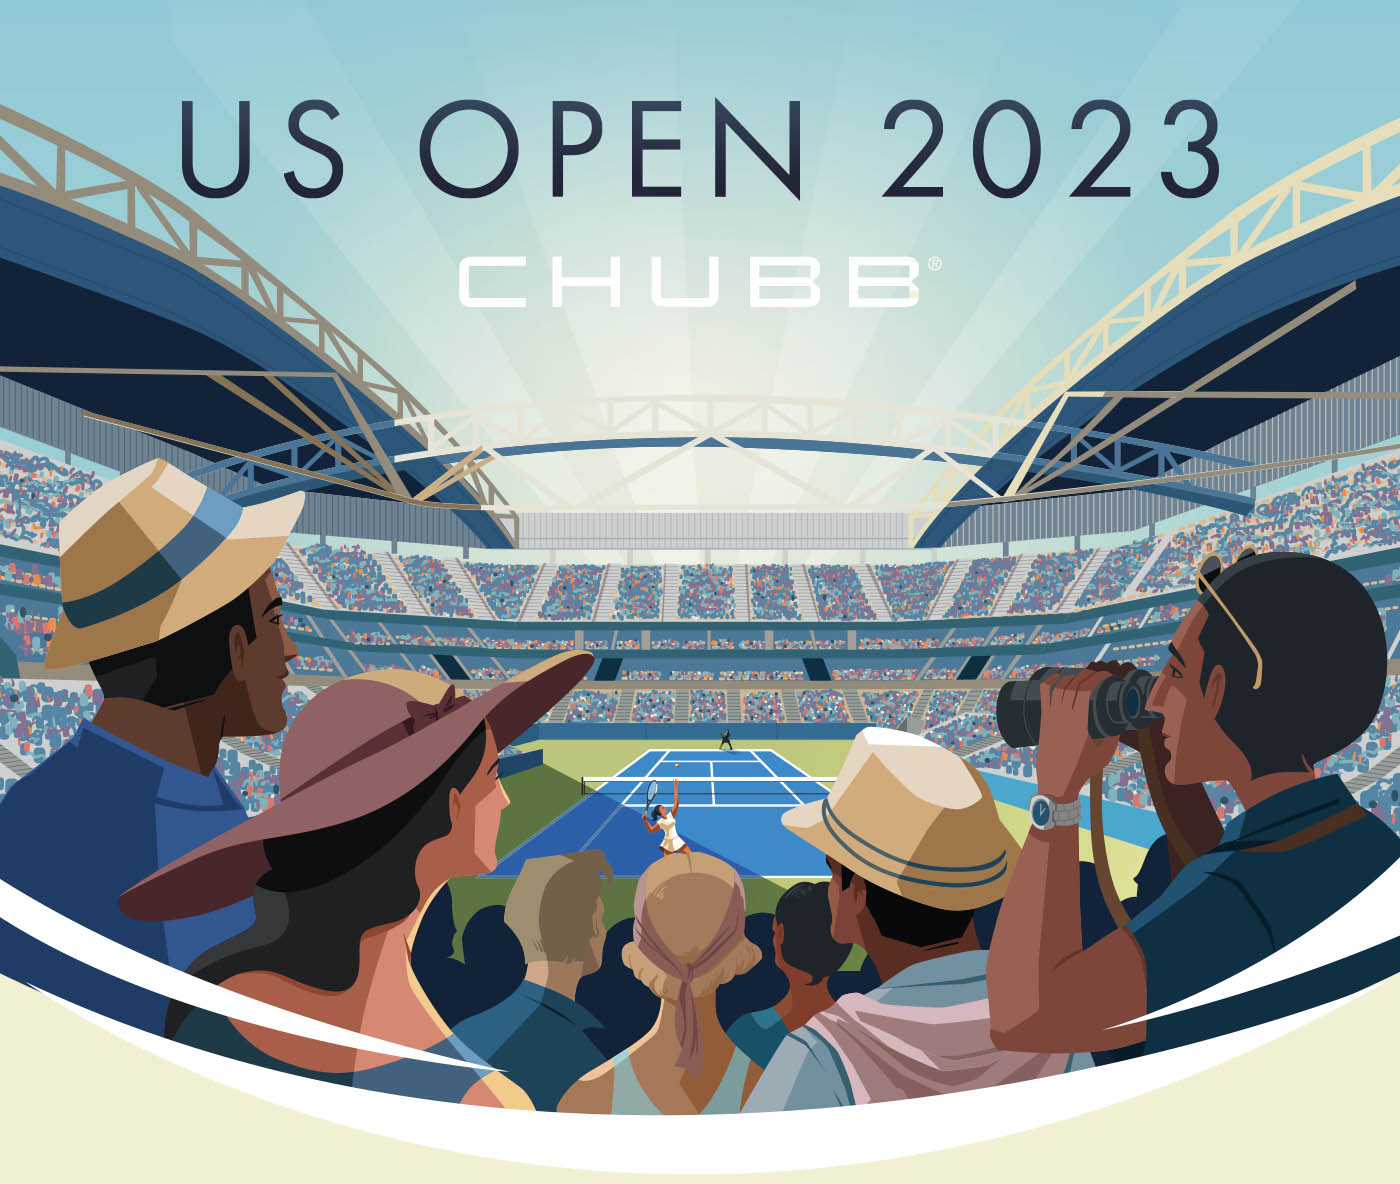 Chubb - US Open 2023 - top illustration